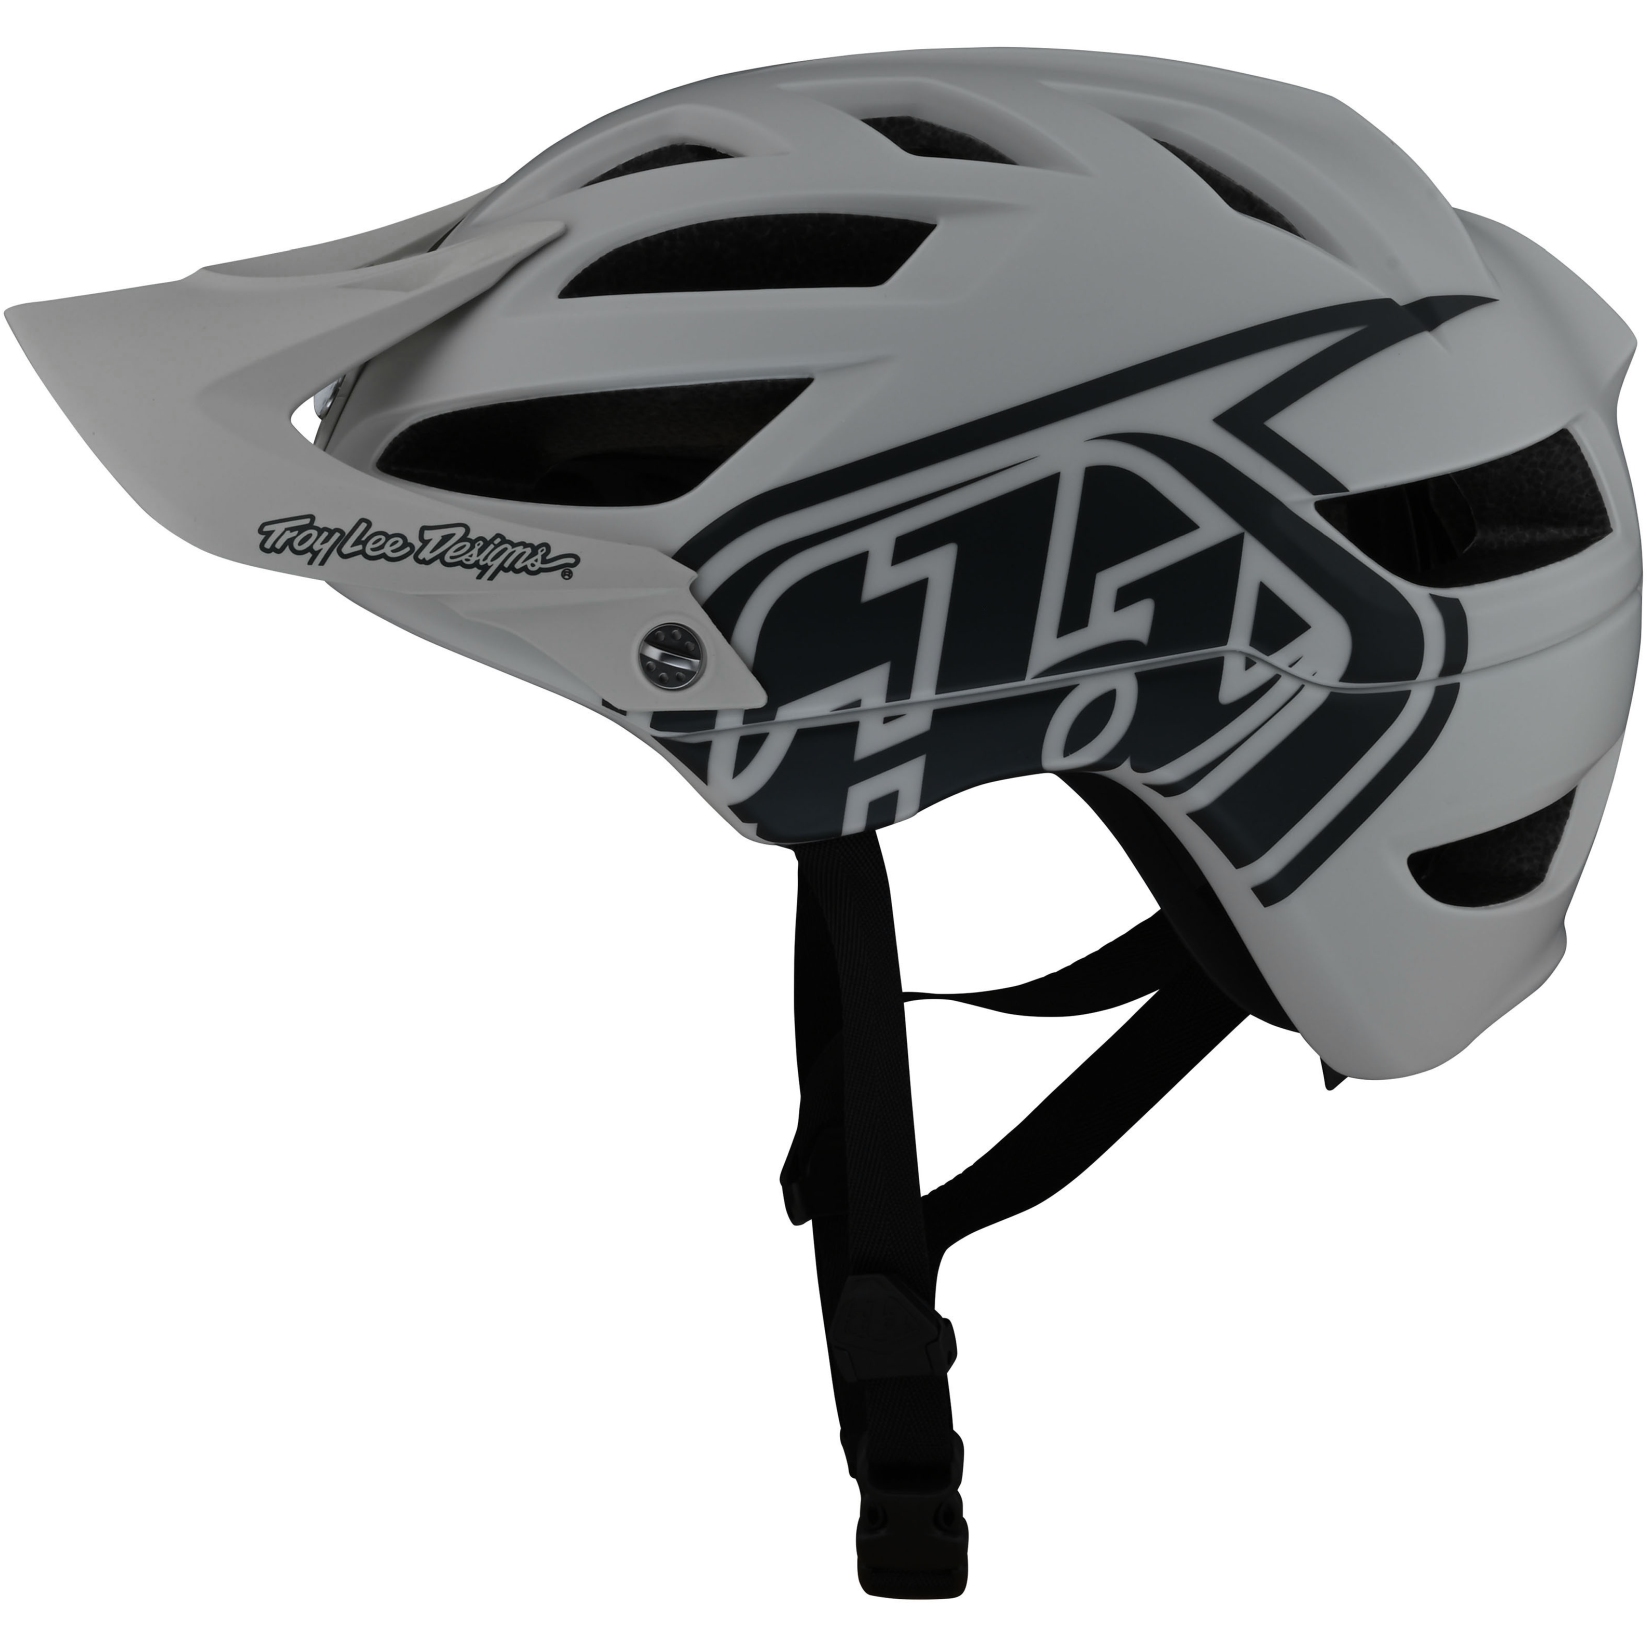 Productfoto van Troy Lee Designs A1 Drone Helmet - silver